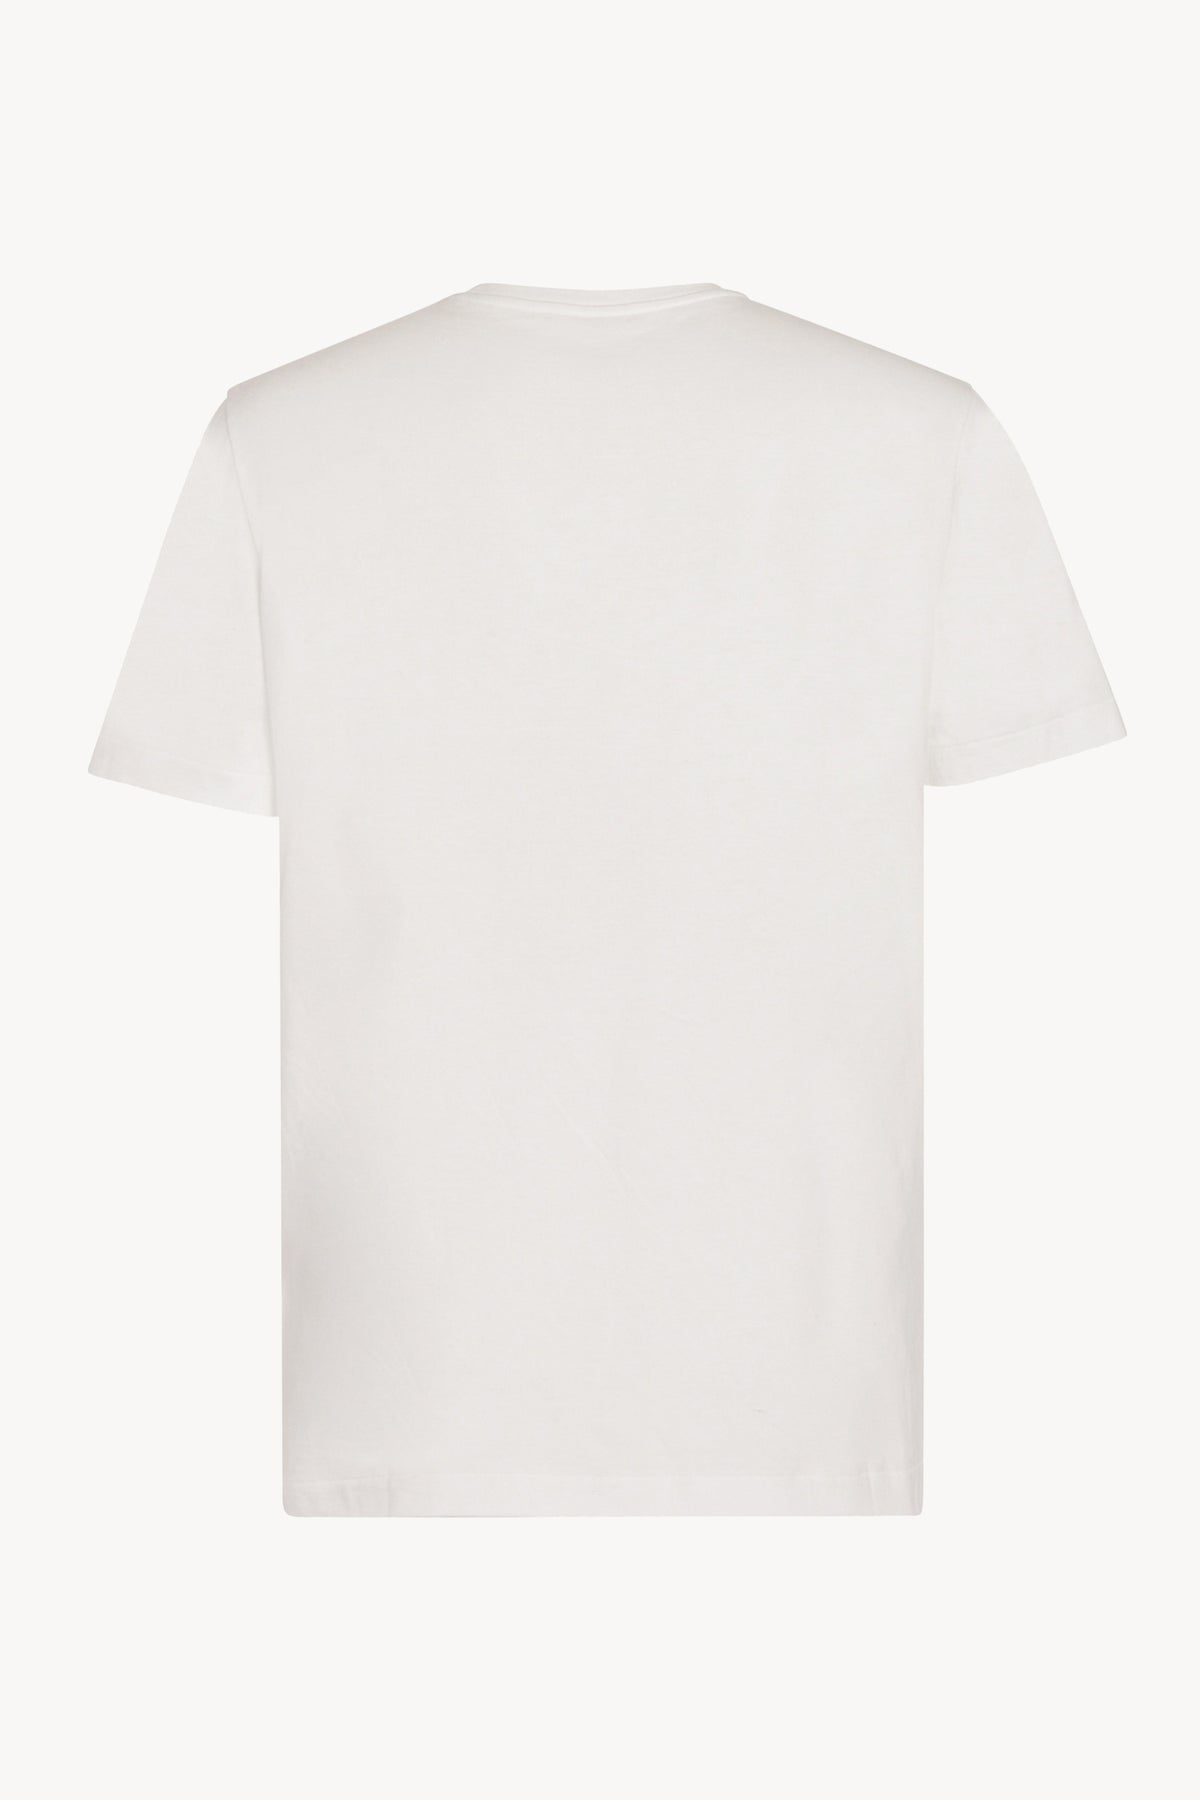 The row LUKE T-SHIRT Tシャツ 黒 ユニセックス対応 ①着丈69cm